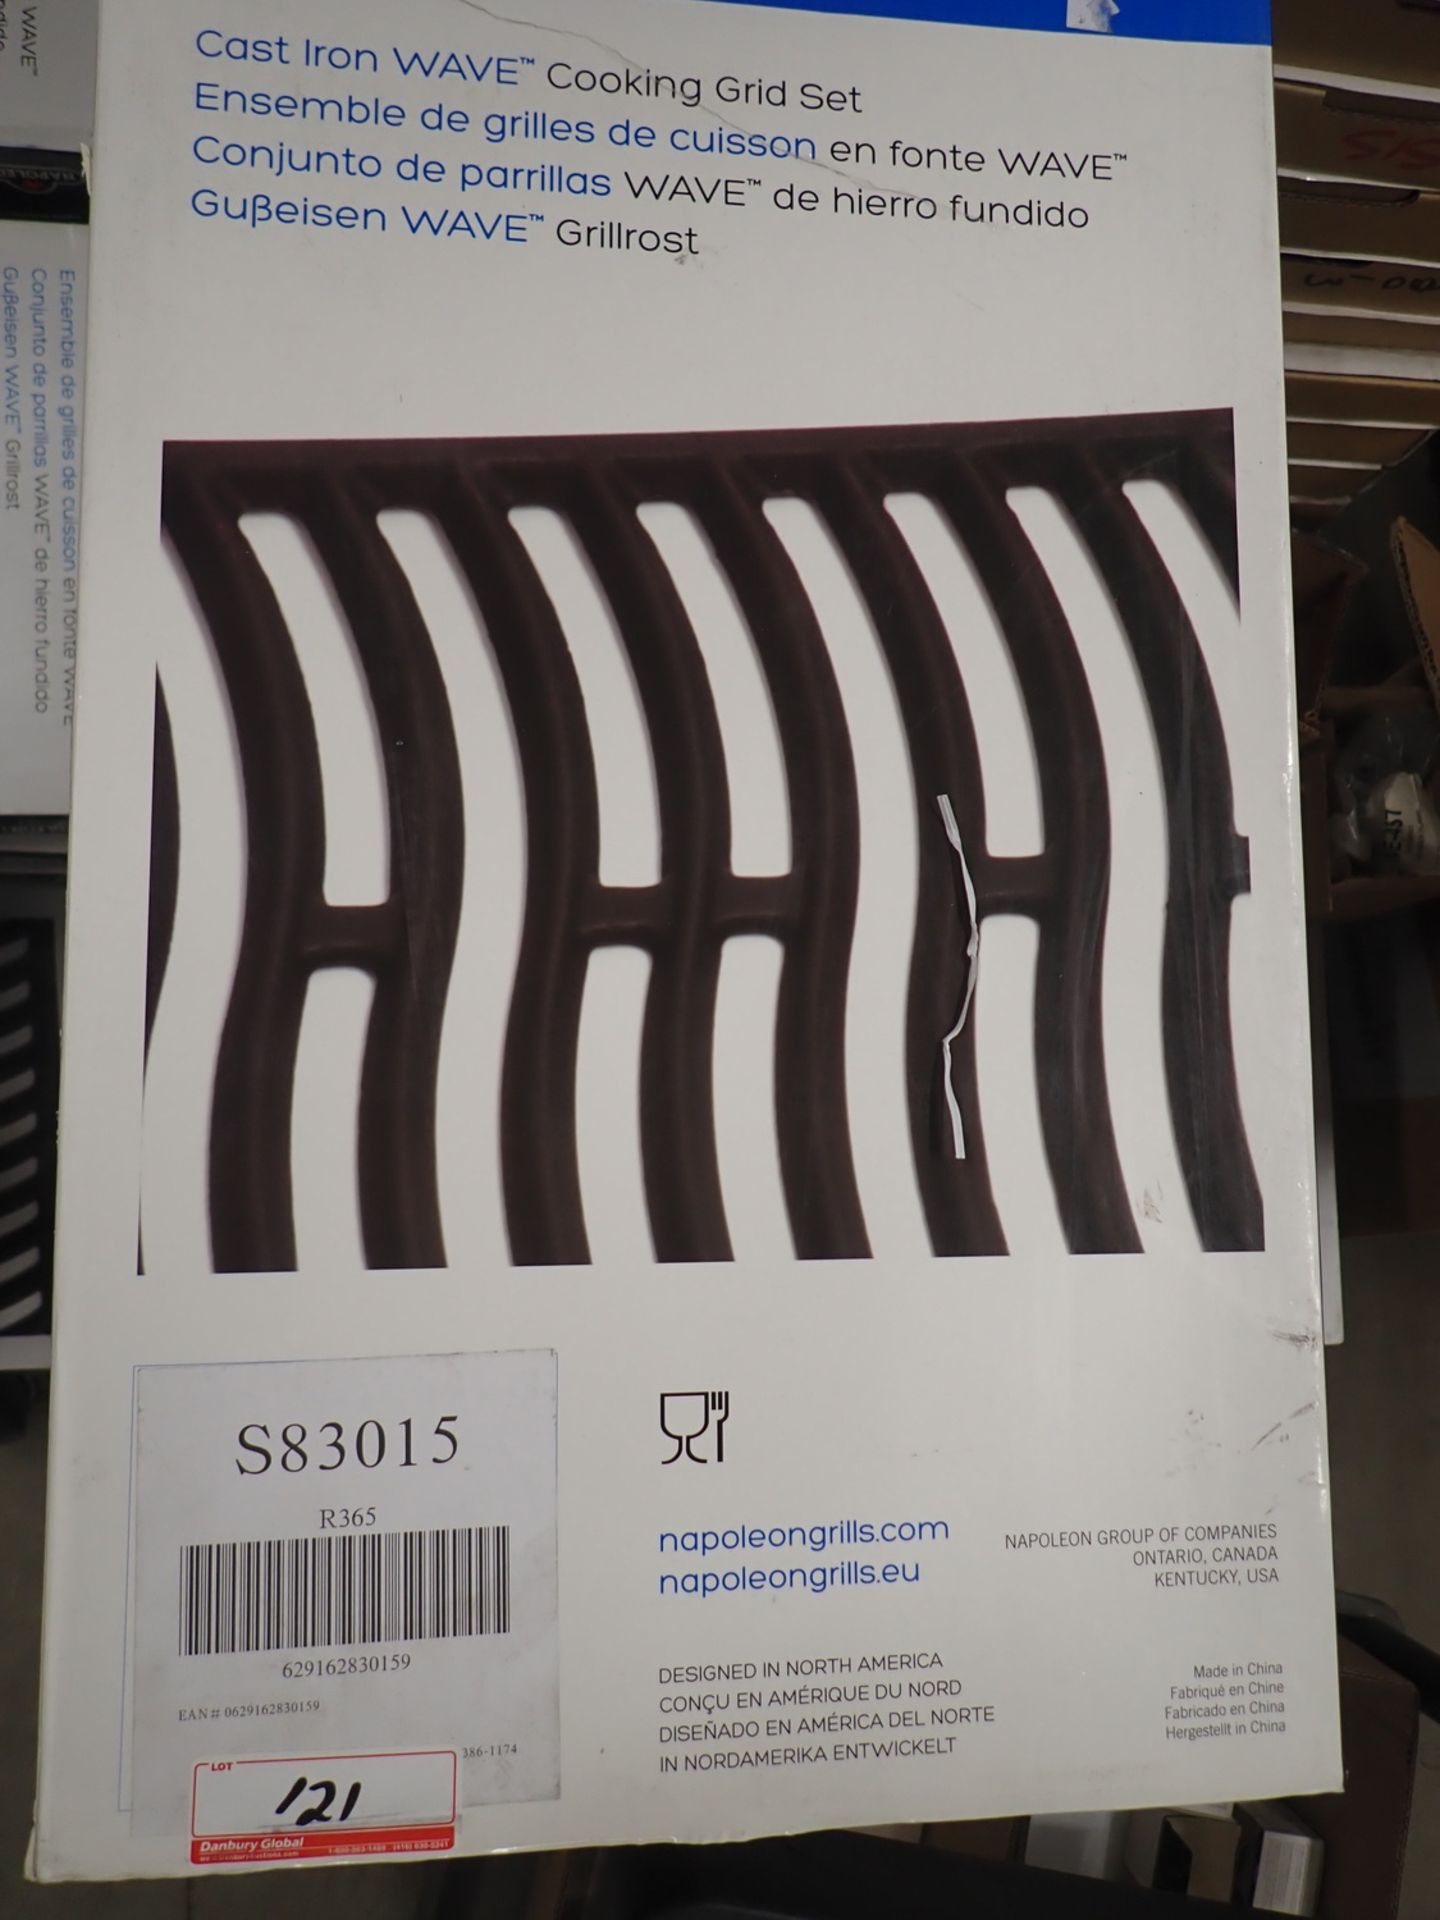 UNITS - NAPOLEON S83015 CAST IRON COOKING GRILL SETS (RETAIL $79.99 EA)